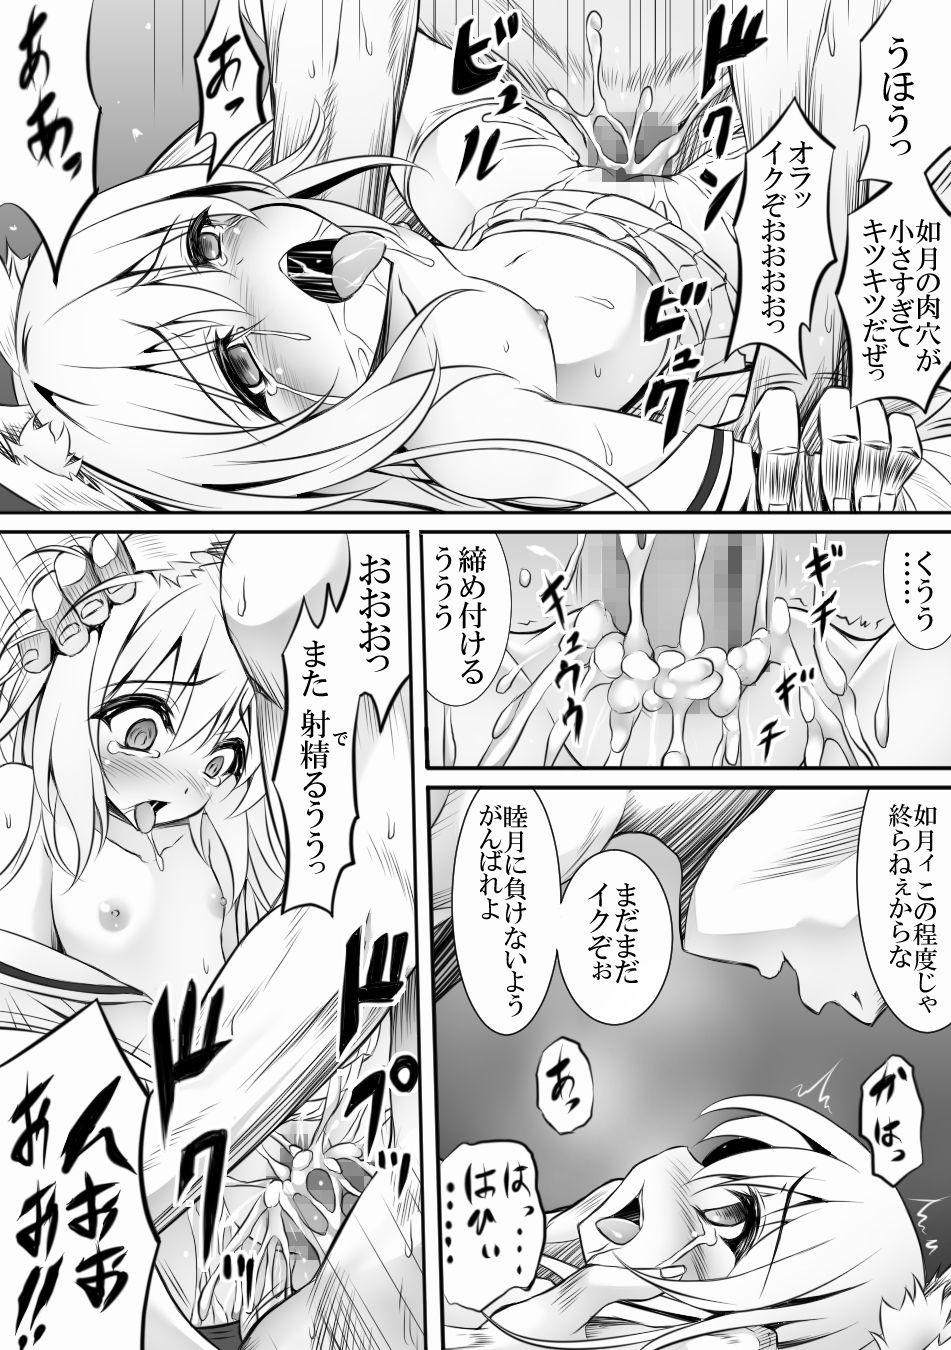 Interacial AzuLan 1 Page Manga - Azur lane Sextoys - Picture 1